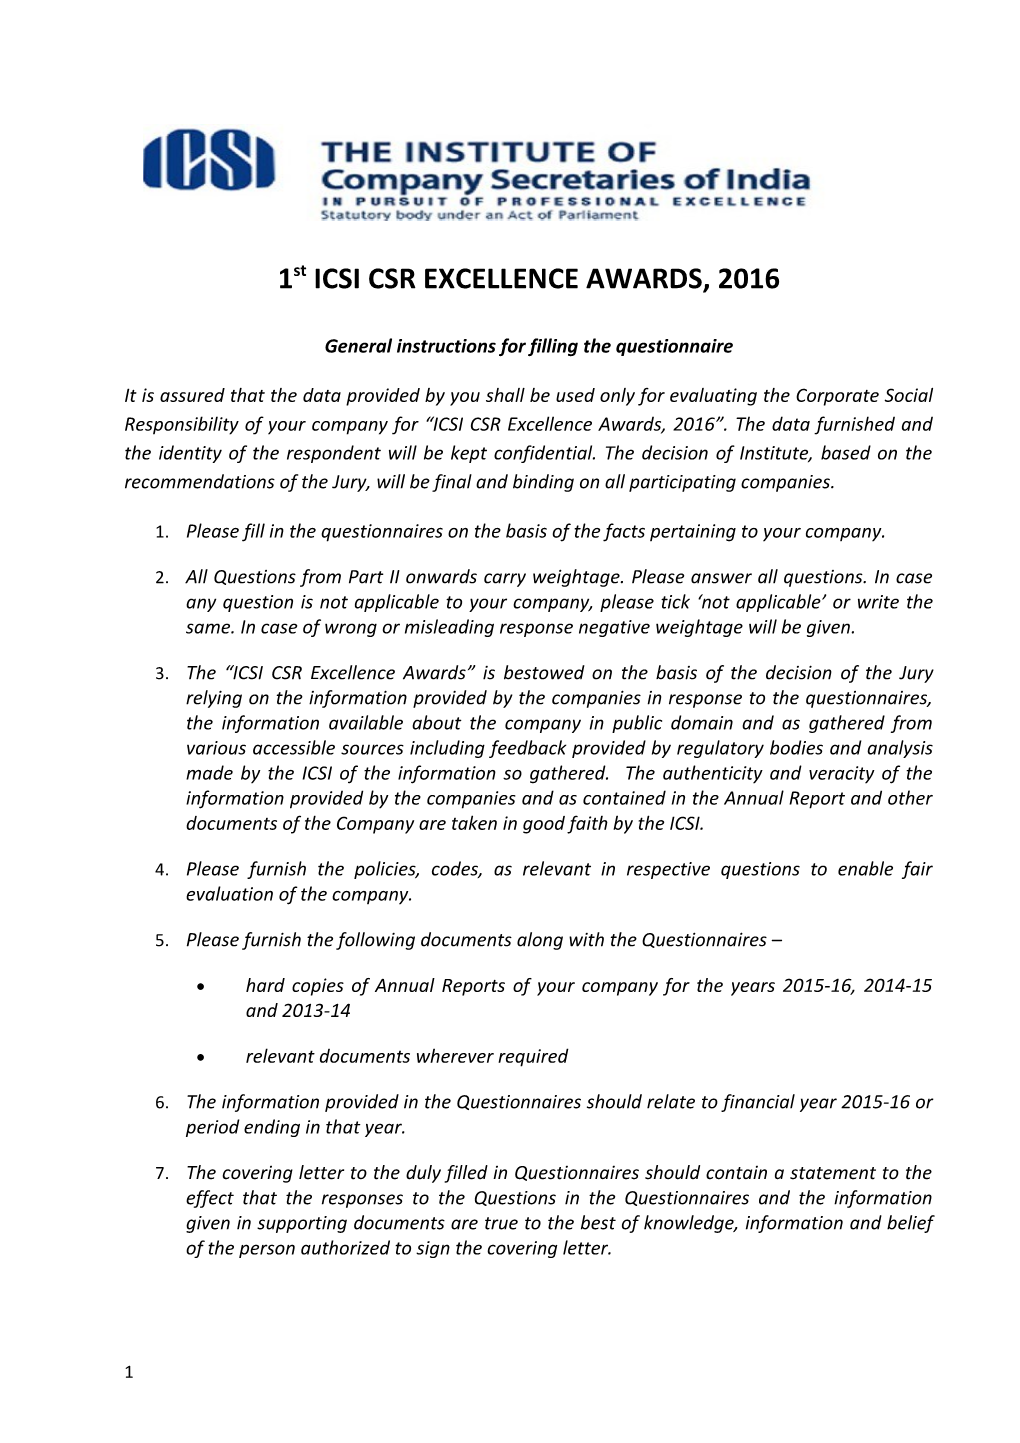 1St ICSI CSR Excellence Awards, 2016